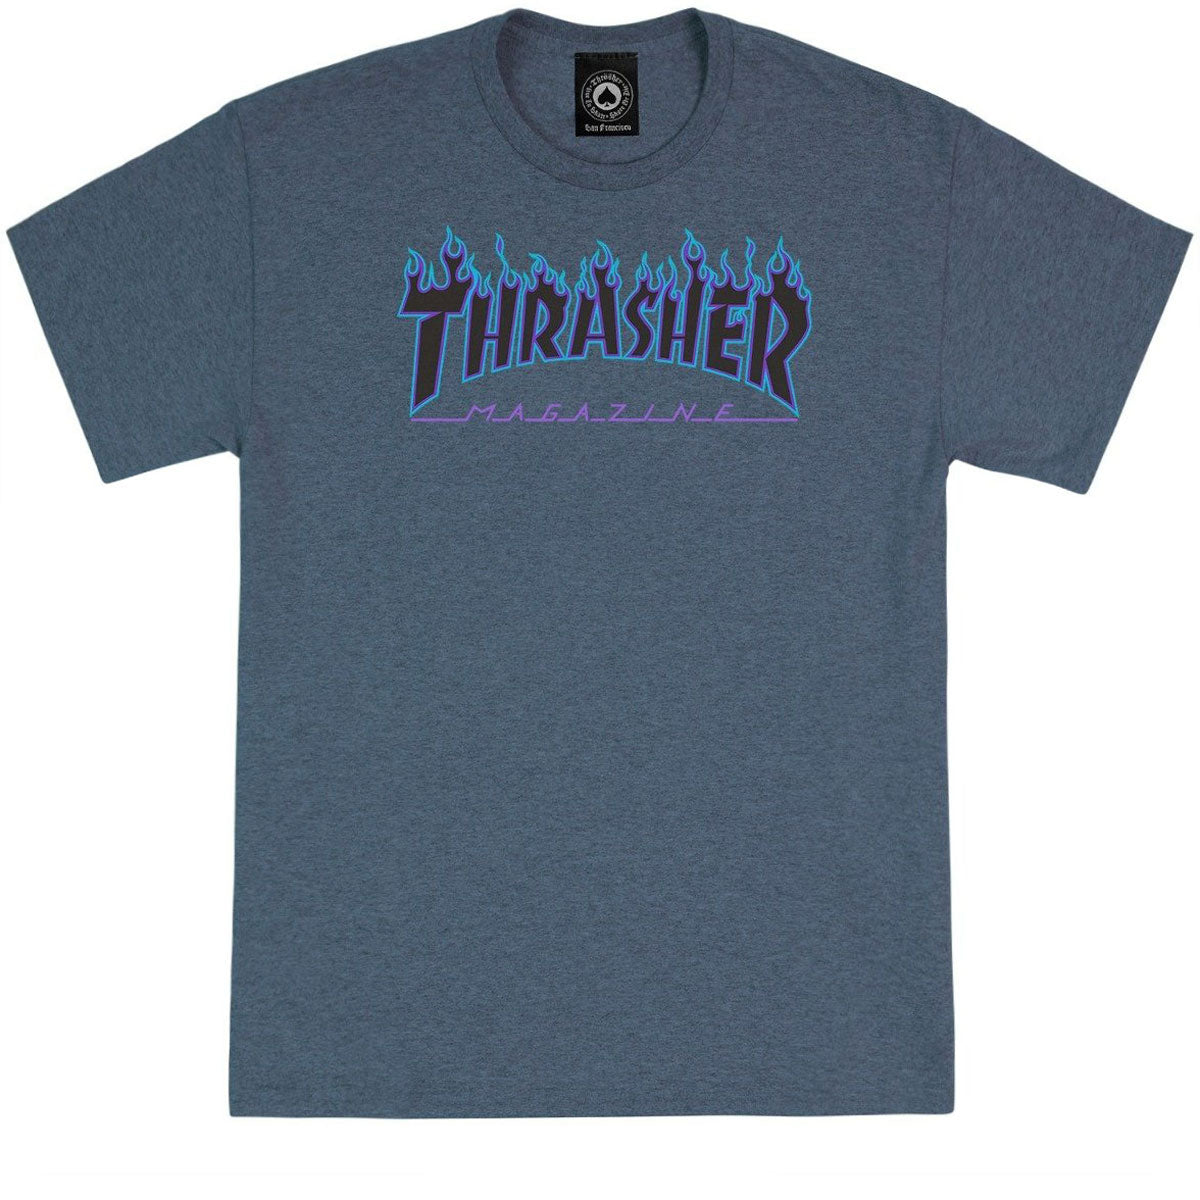 Thrasher Flame T-Shirt - Dark Heather image 1